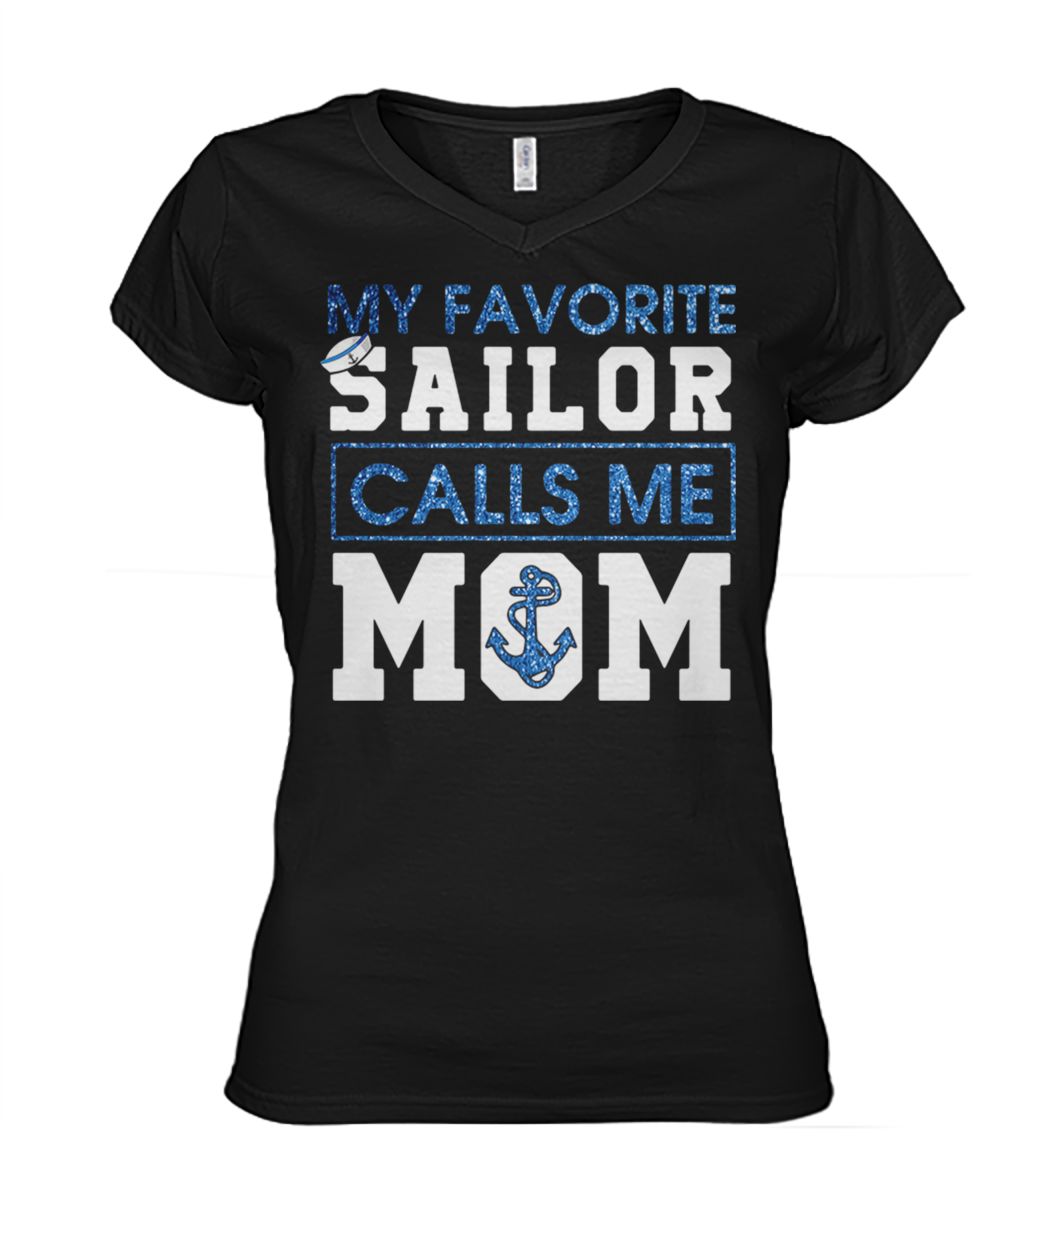 My favorite sailor calls me mom women's v-neck